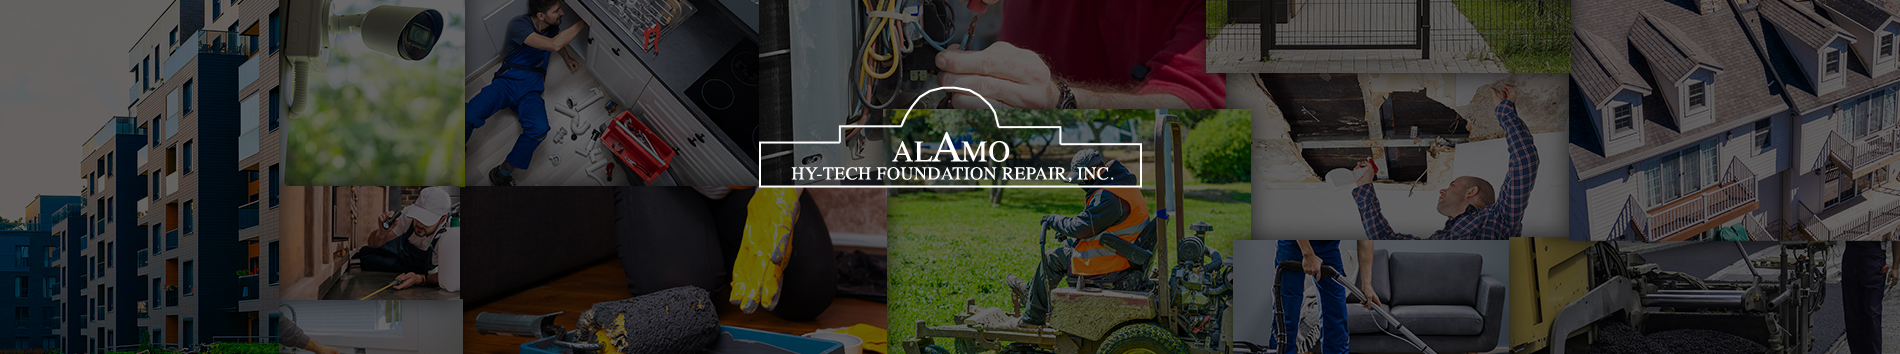 Alamo Hy-Tech Foundation Repair